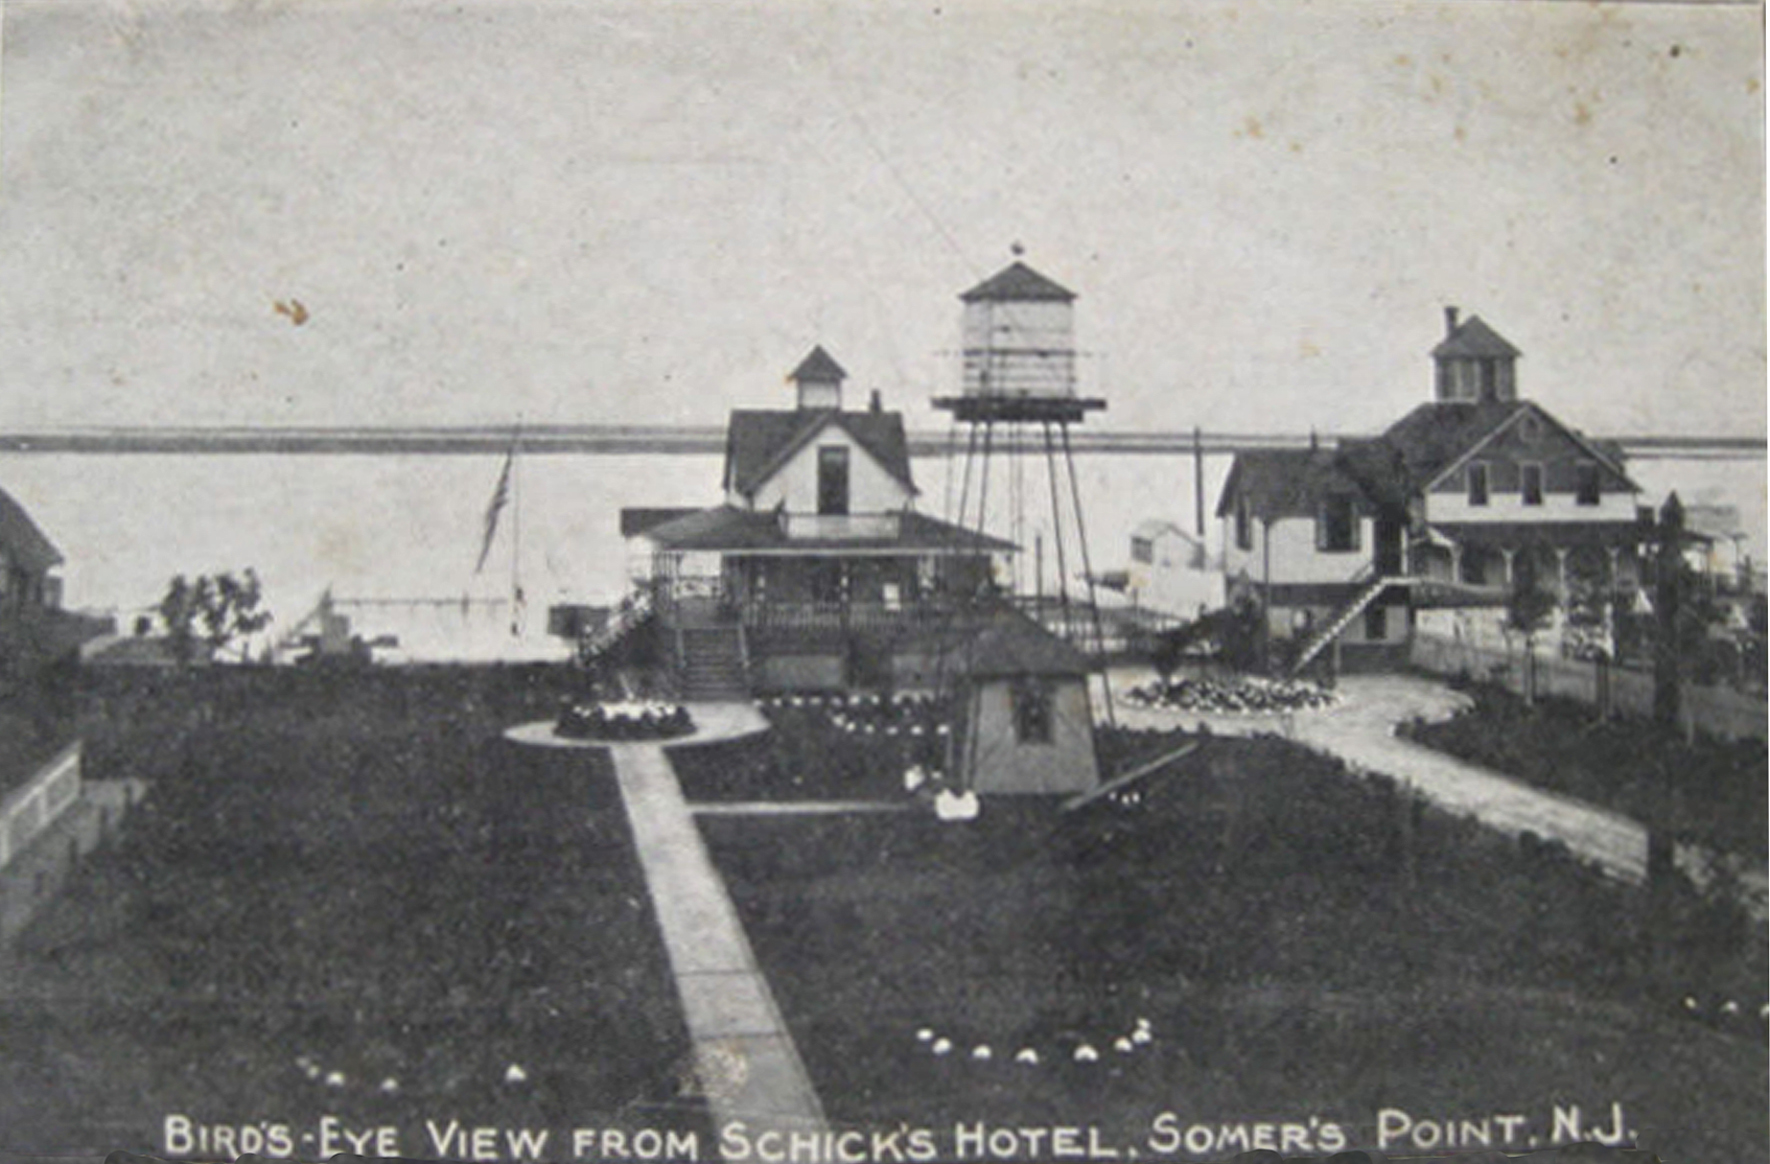 Somers Point - Birds eye view from Schicks Hotel - c 1910